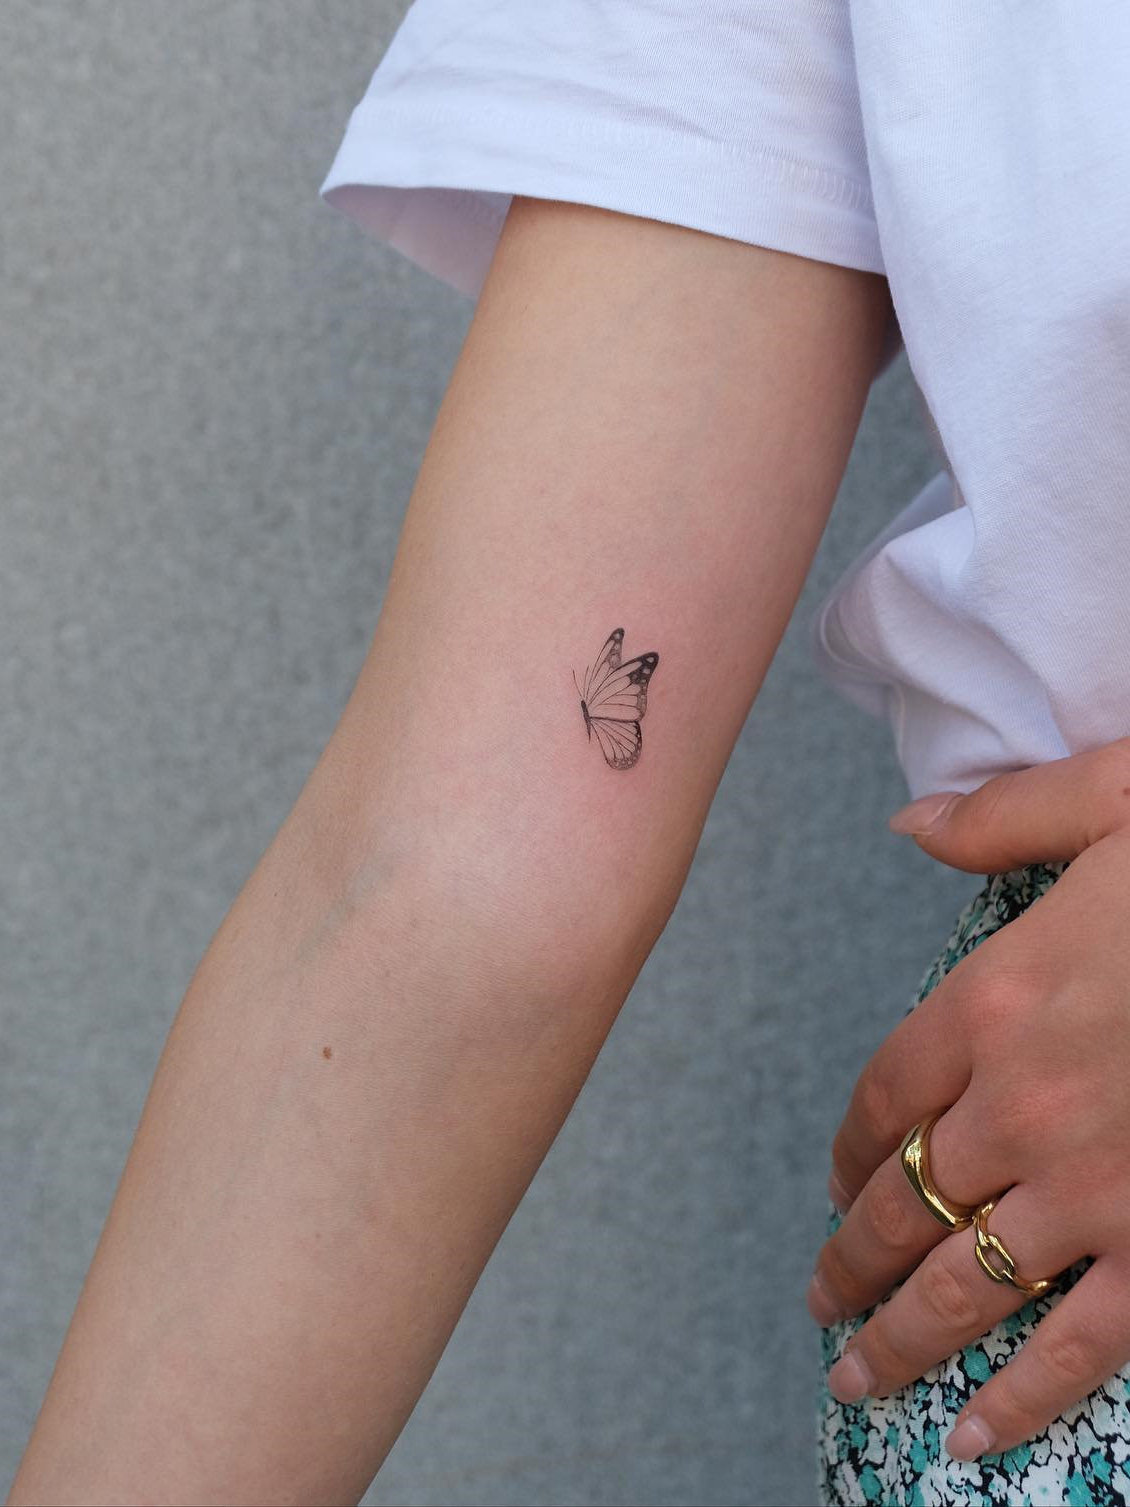 Inner Arm Tattoos for Females, small tattoos for women